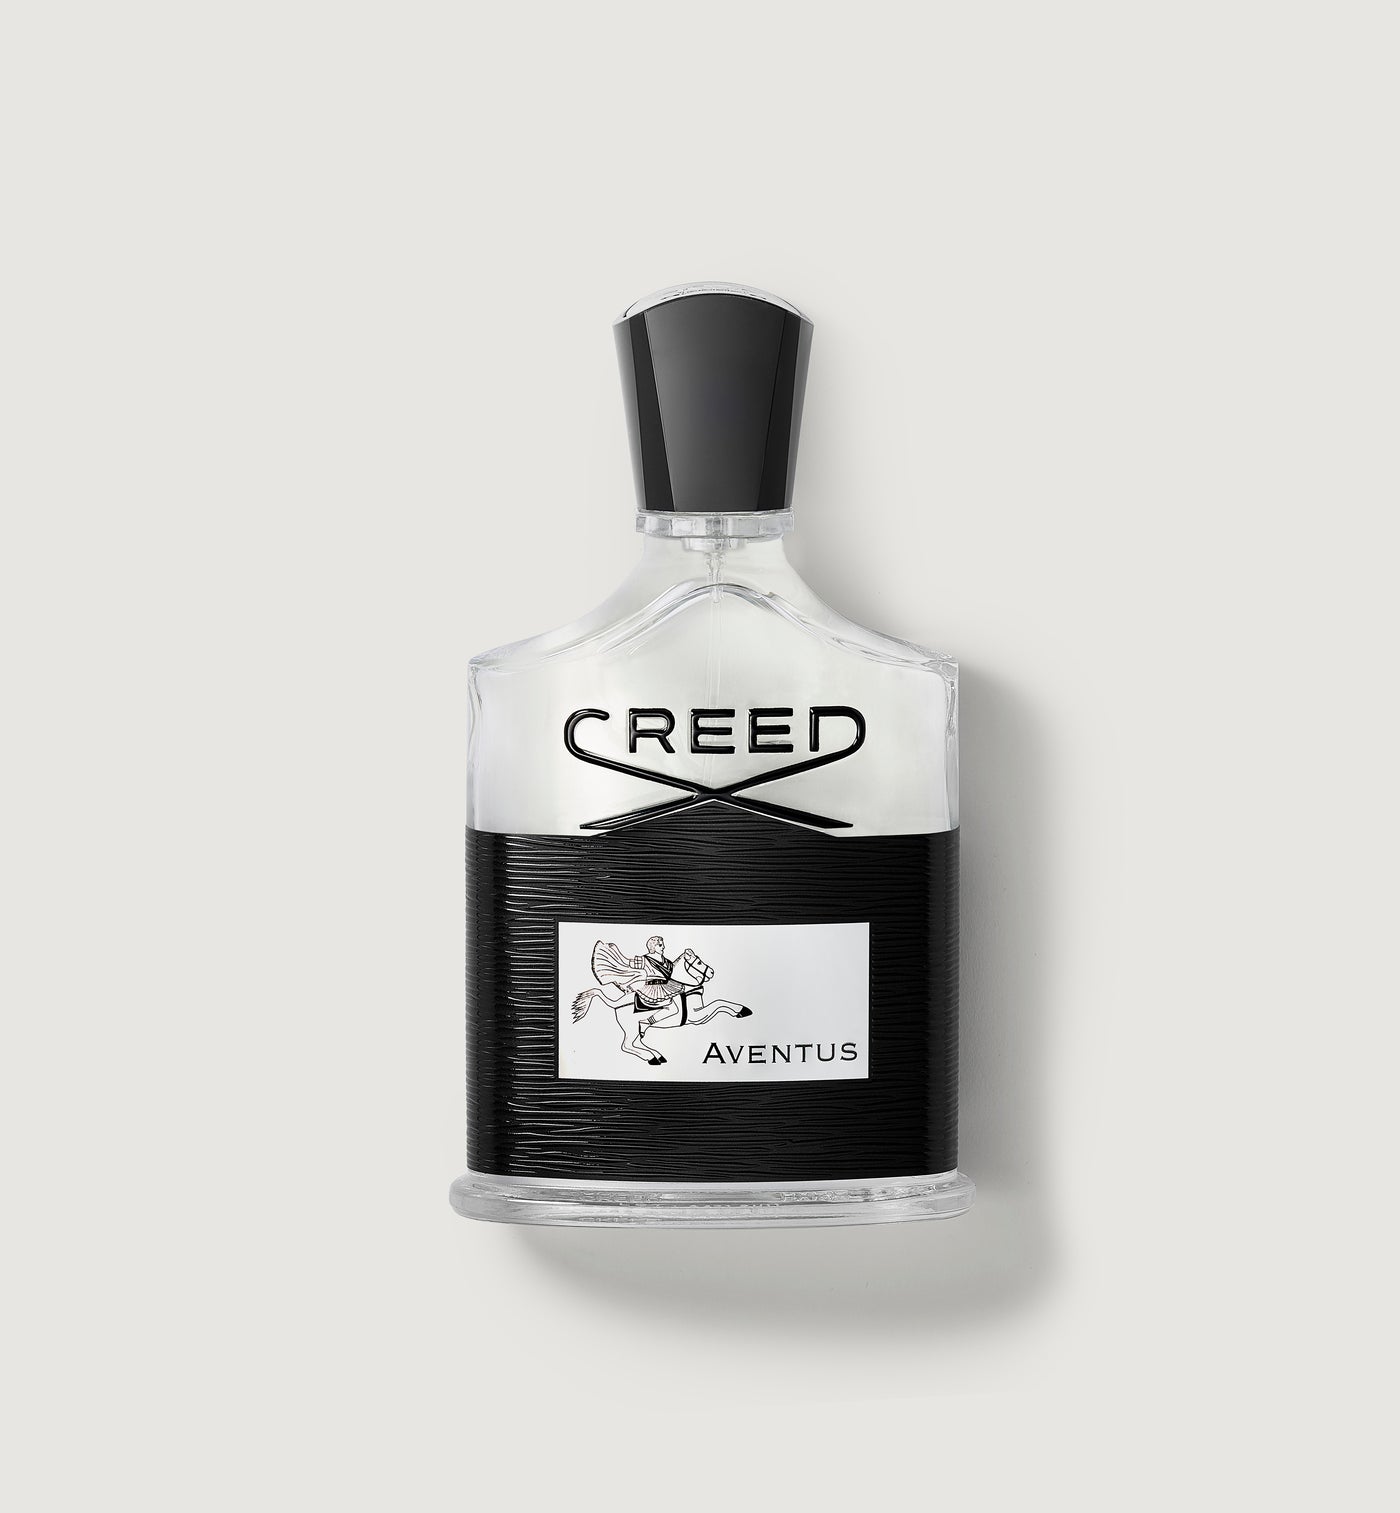 CREED - AVENTUS 100 ml